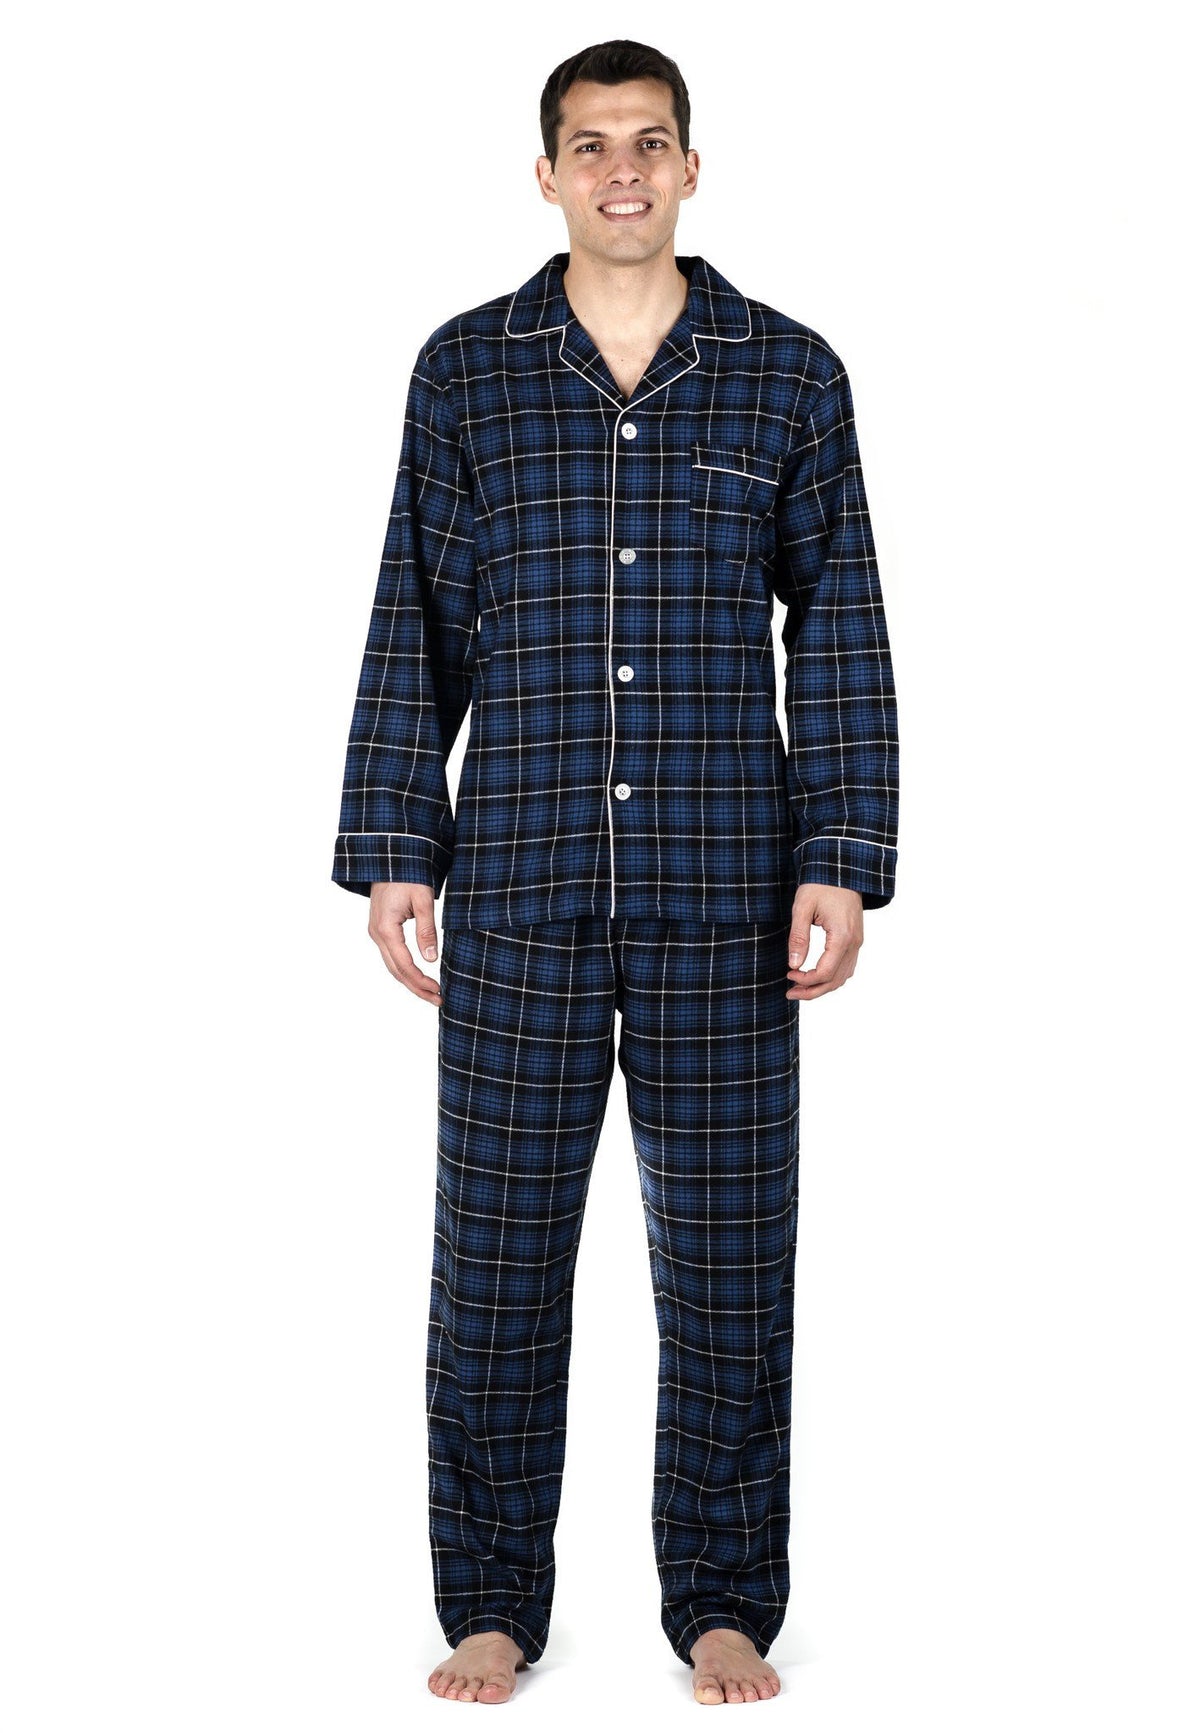 Men's Premium 100% Cotton Flannel Pajama Sleepwear Set (Relaxed Fit) - Black/Navy Plaid